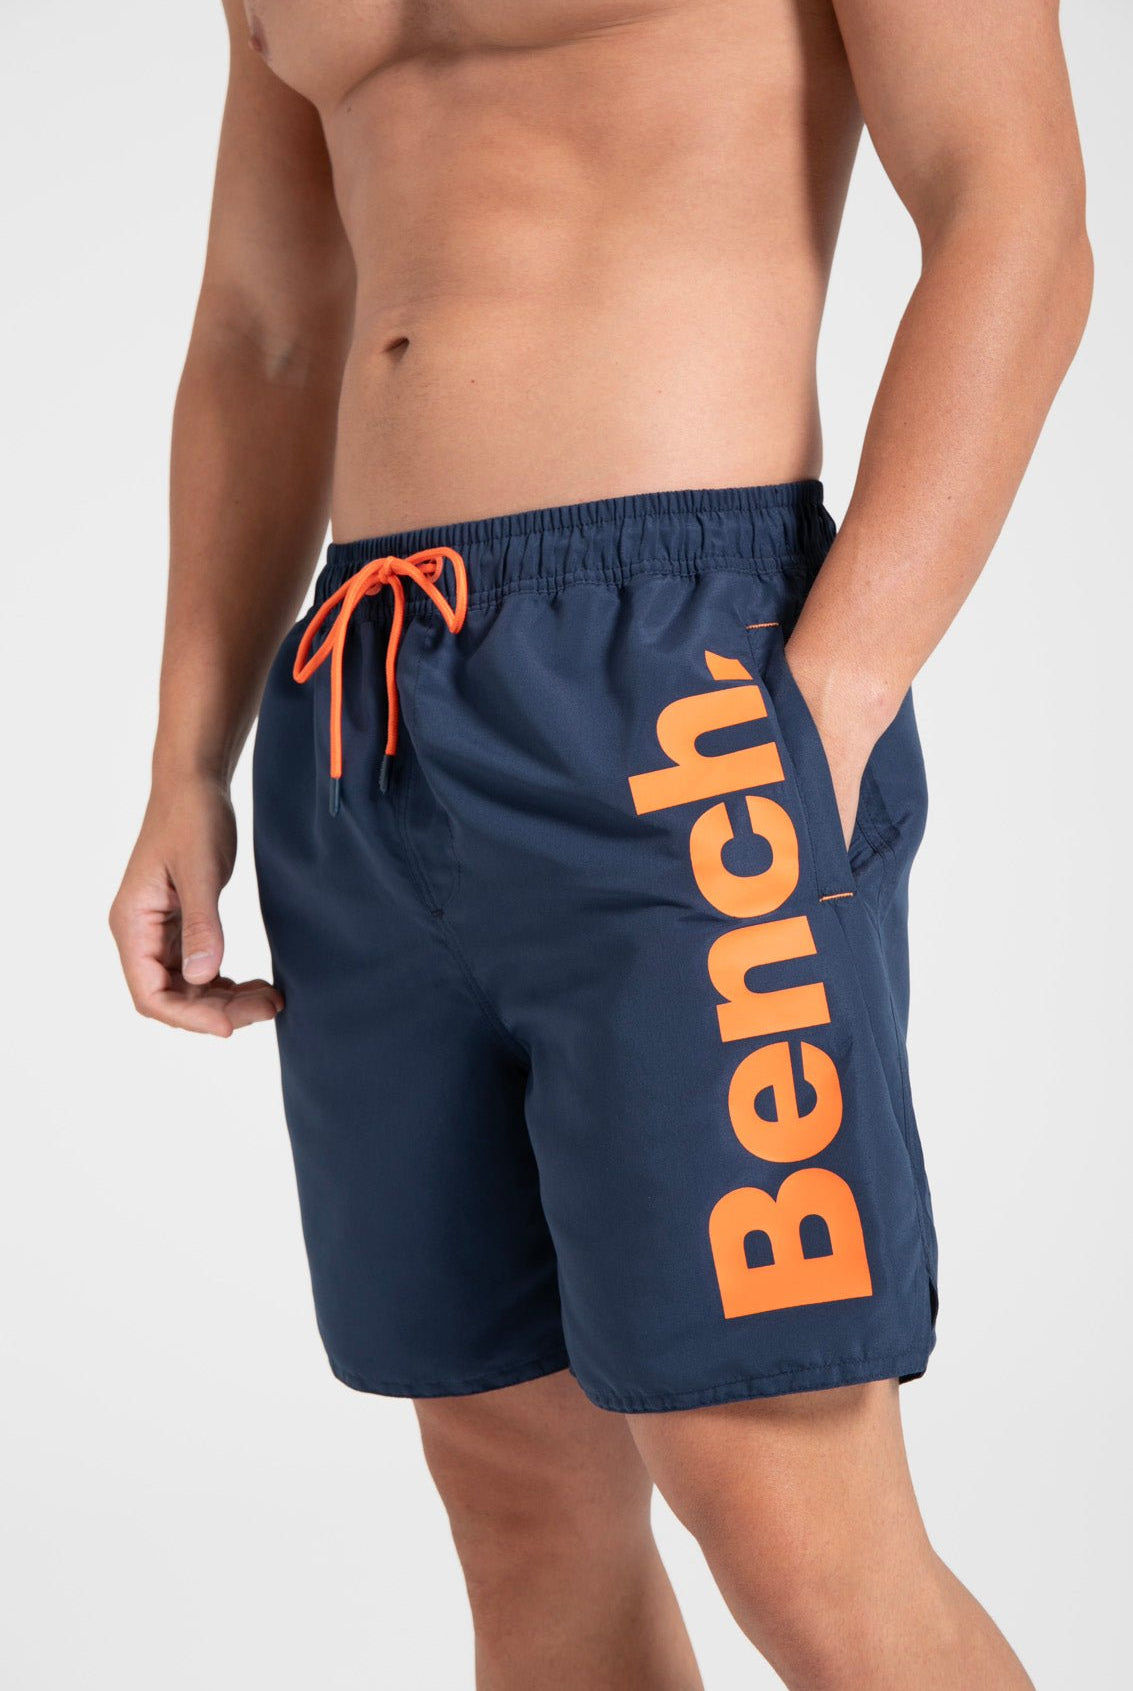 Mens 'TAHITI' Swim Shorts - NAVY - Shop at www.Bench.co.uk #LoveMyHood